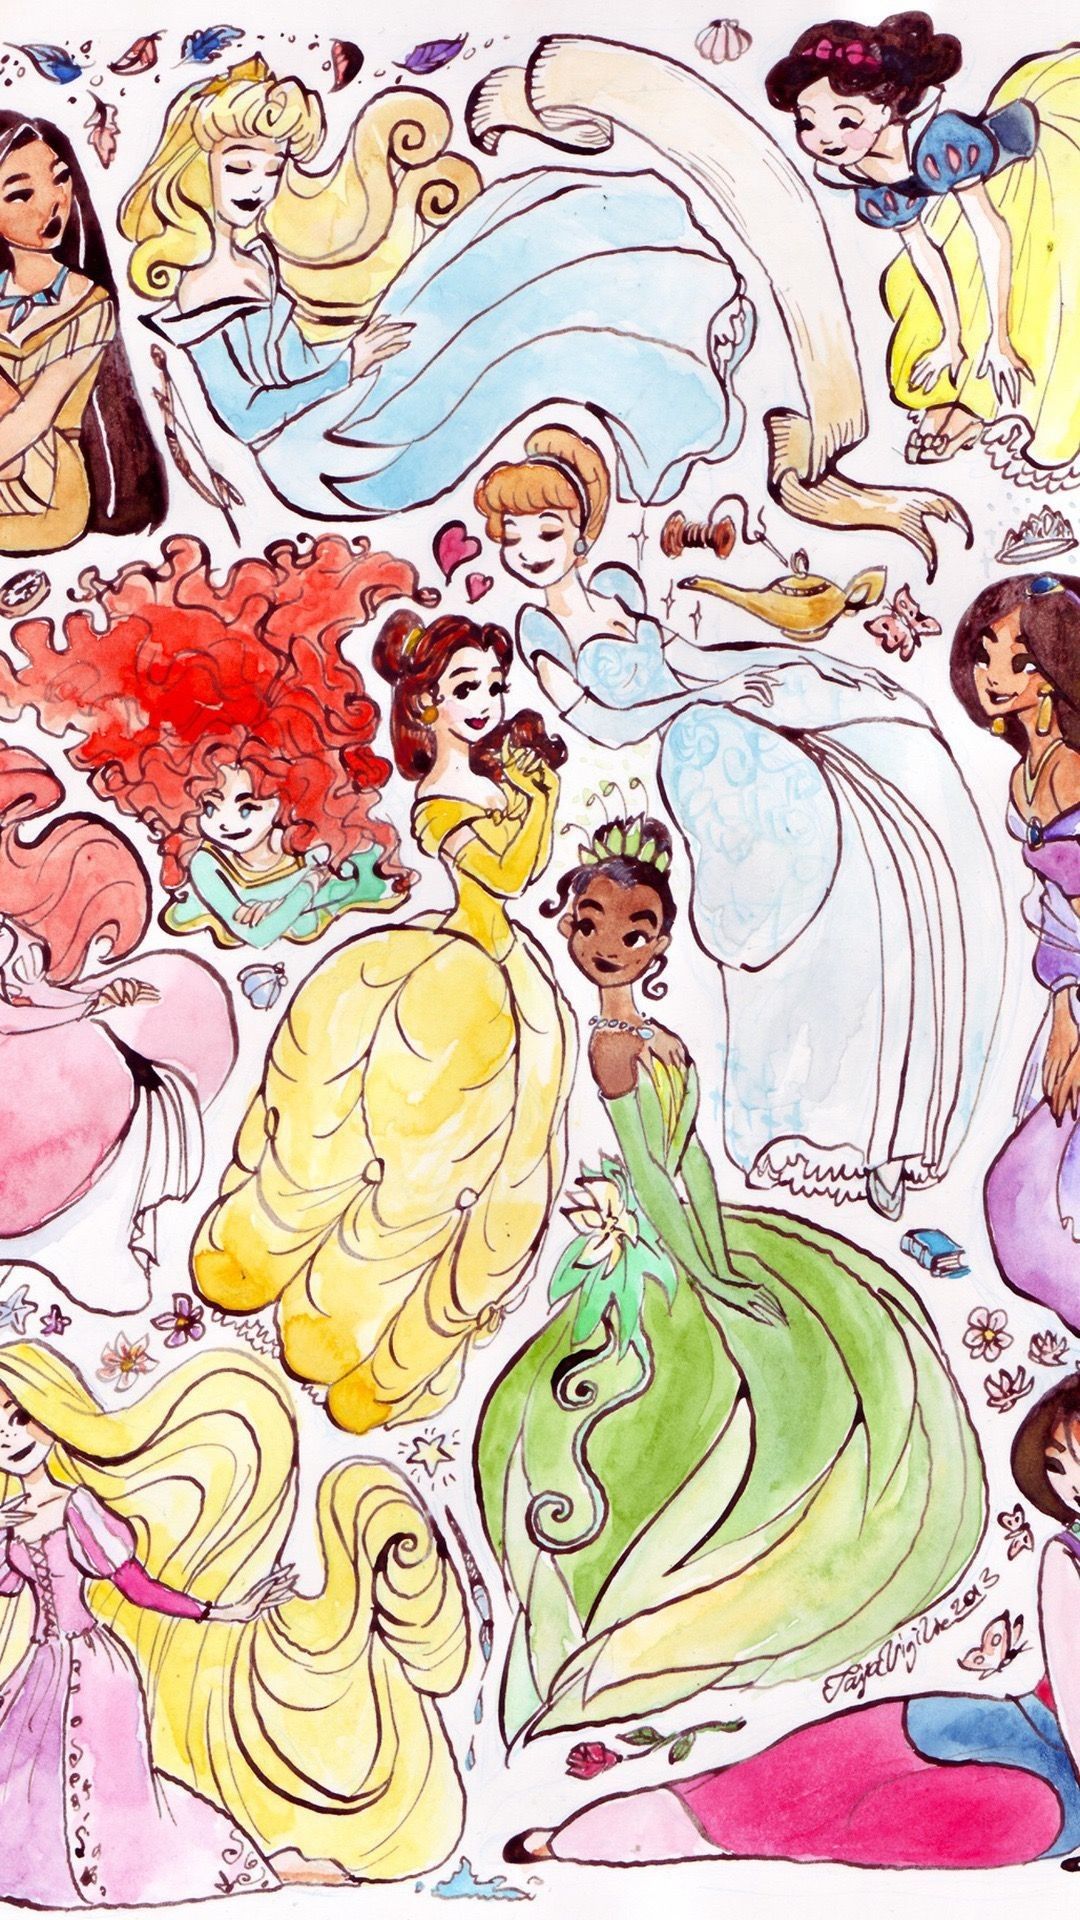 Disney Princesses wallpaper wallpaper Collections